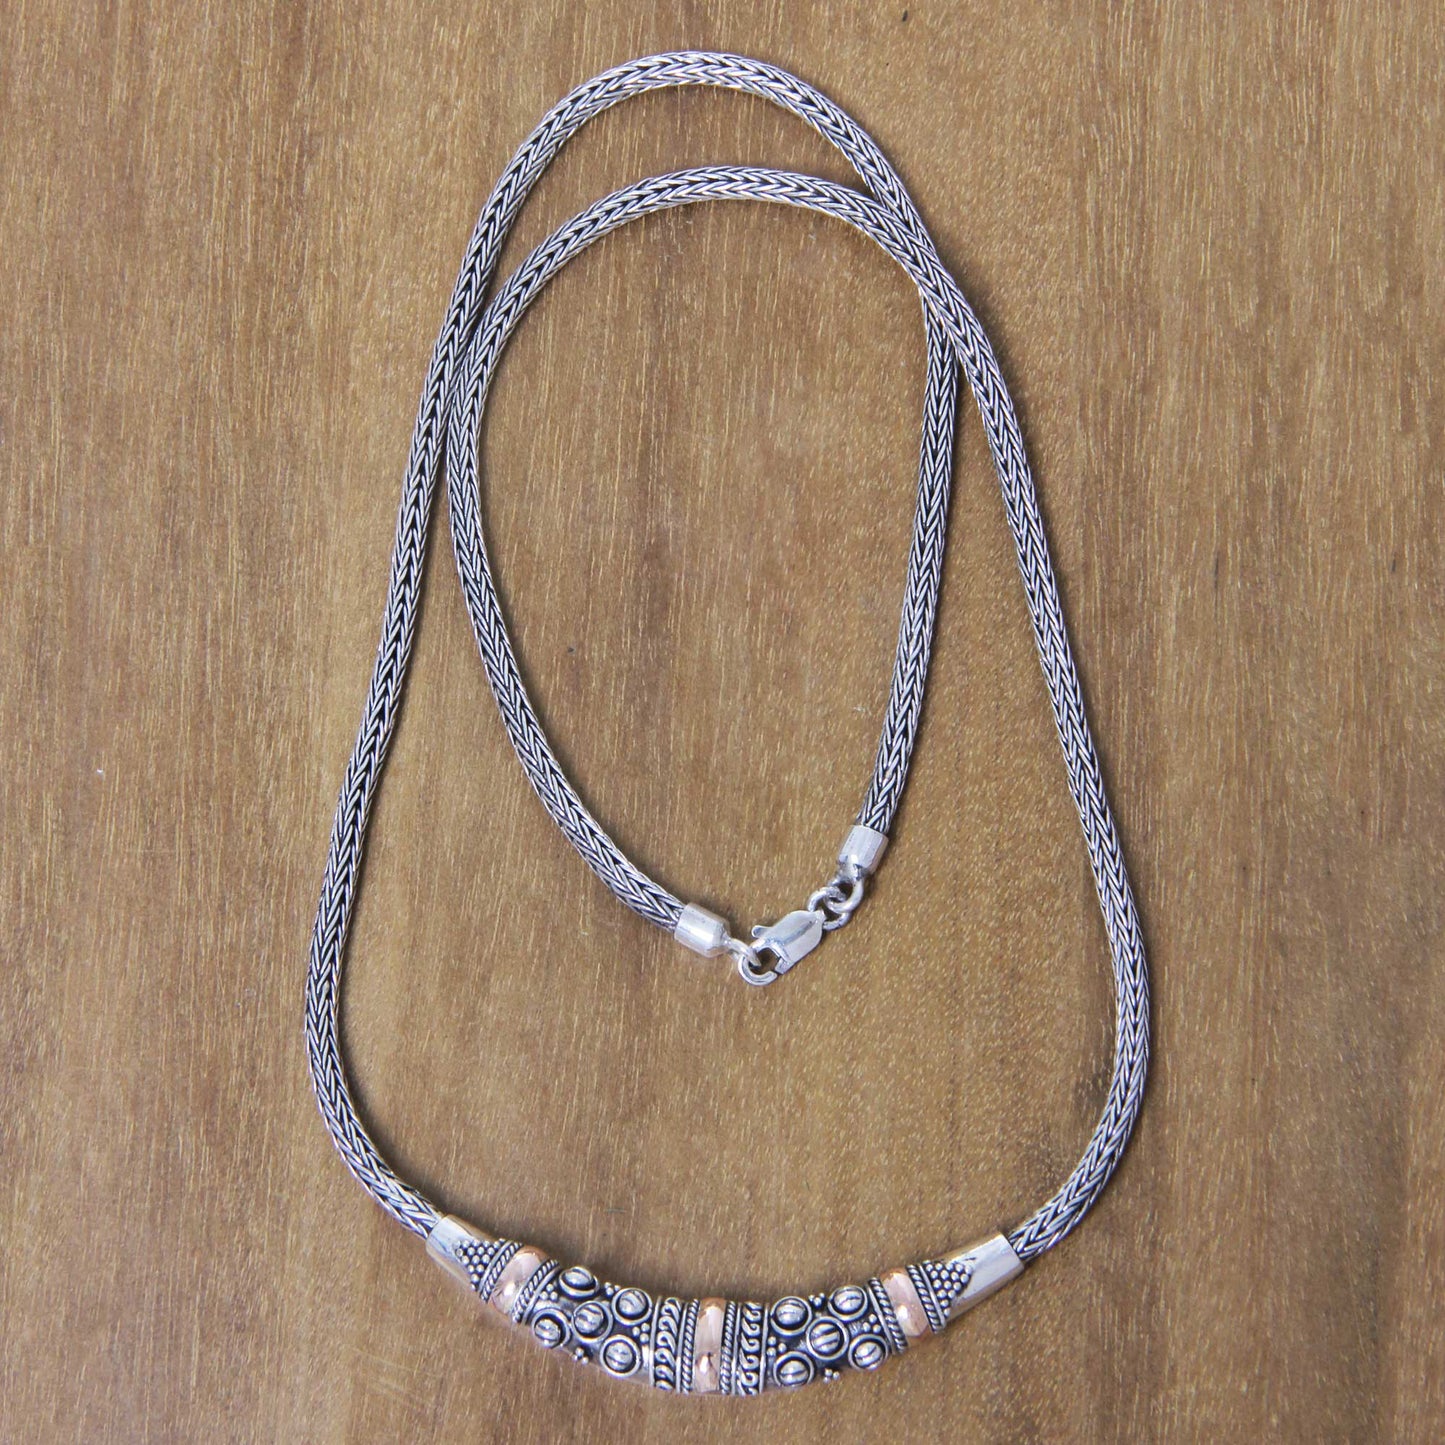 Denpasar Raindrops Sterling Silver Necklace